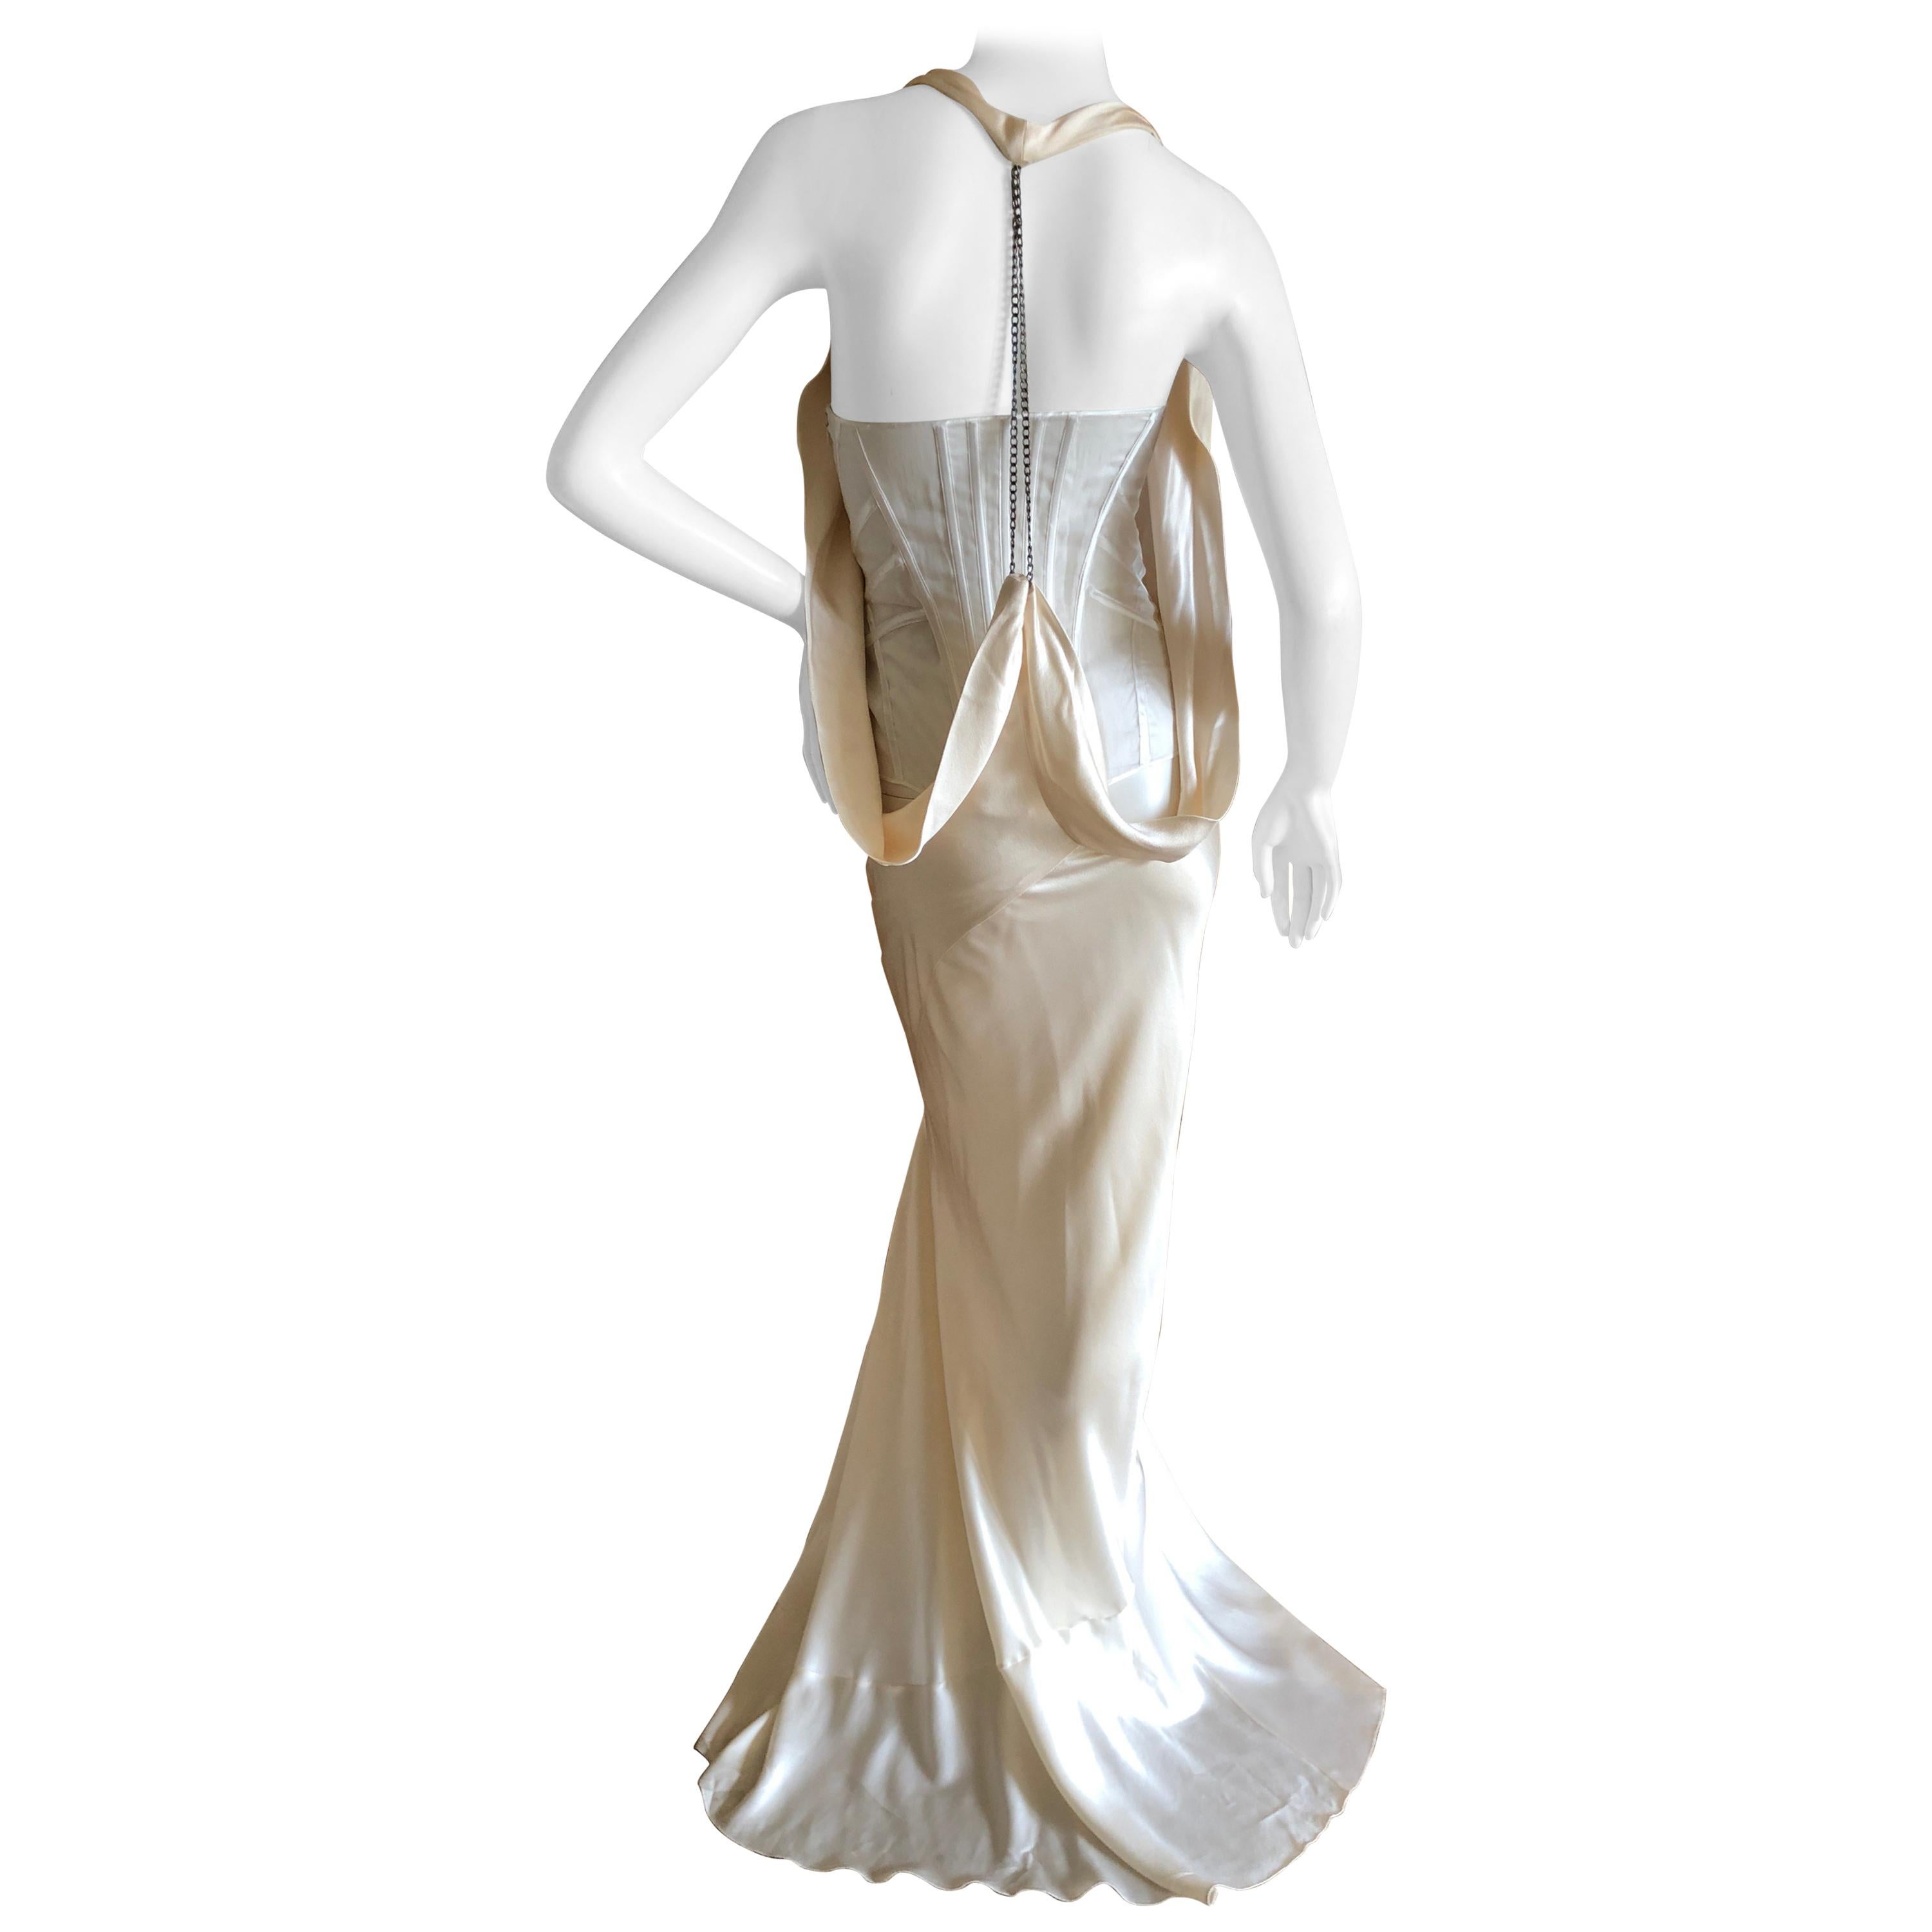  Alexander McQueen Daring Ivory Duchesse Silk Satin Evening or Wedding Dress